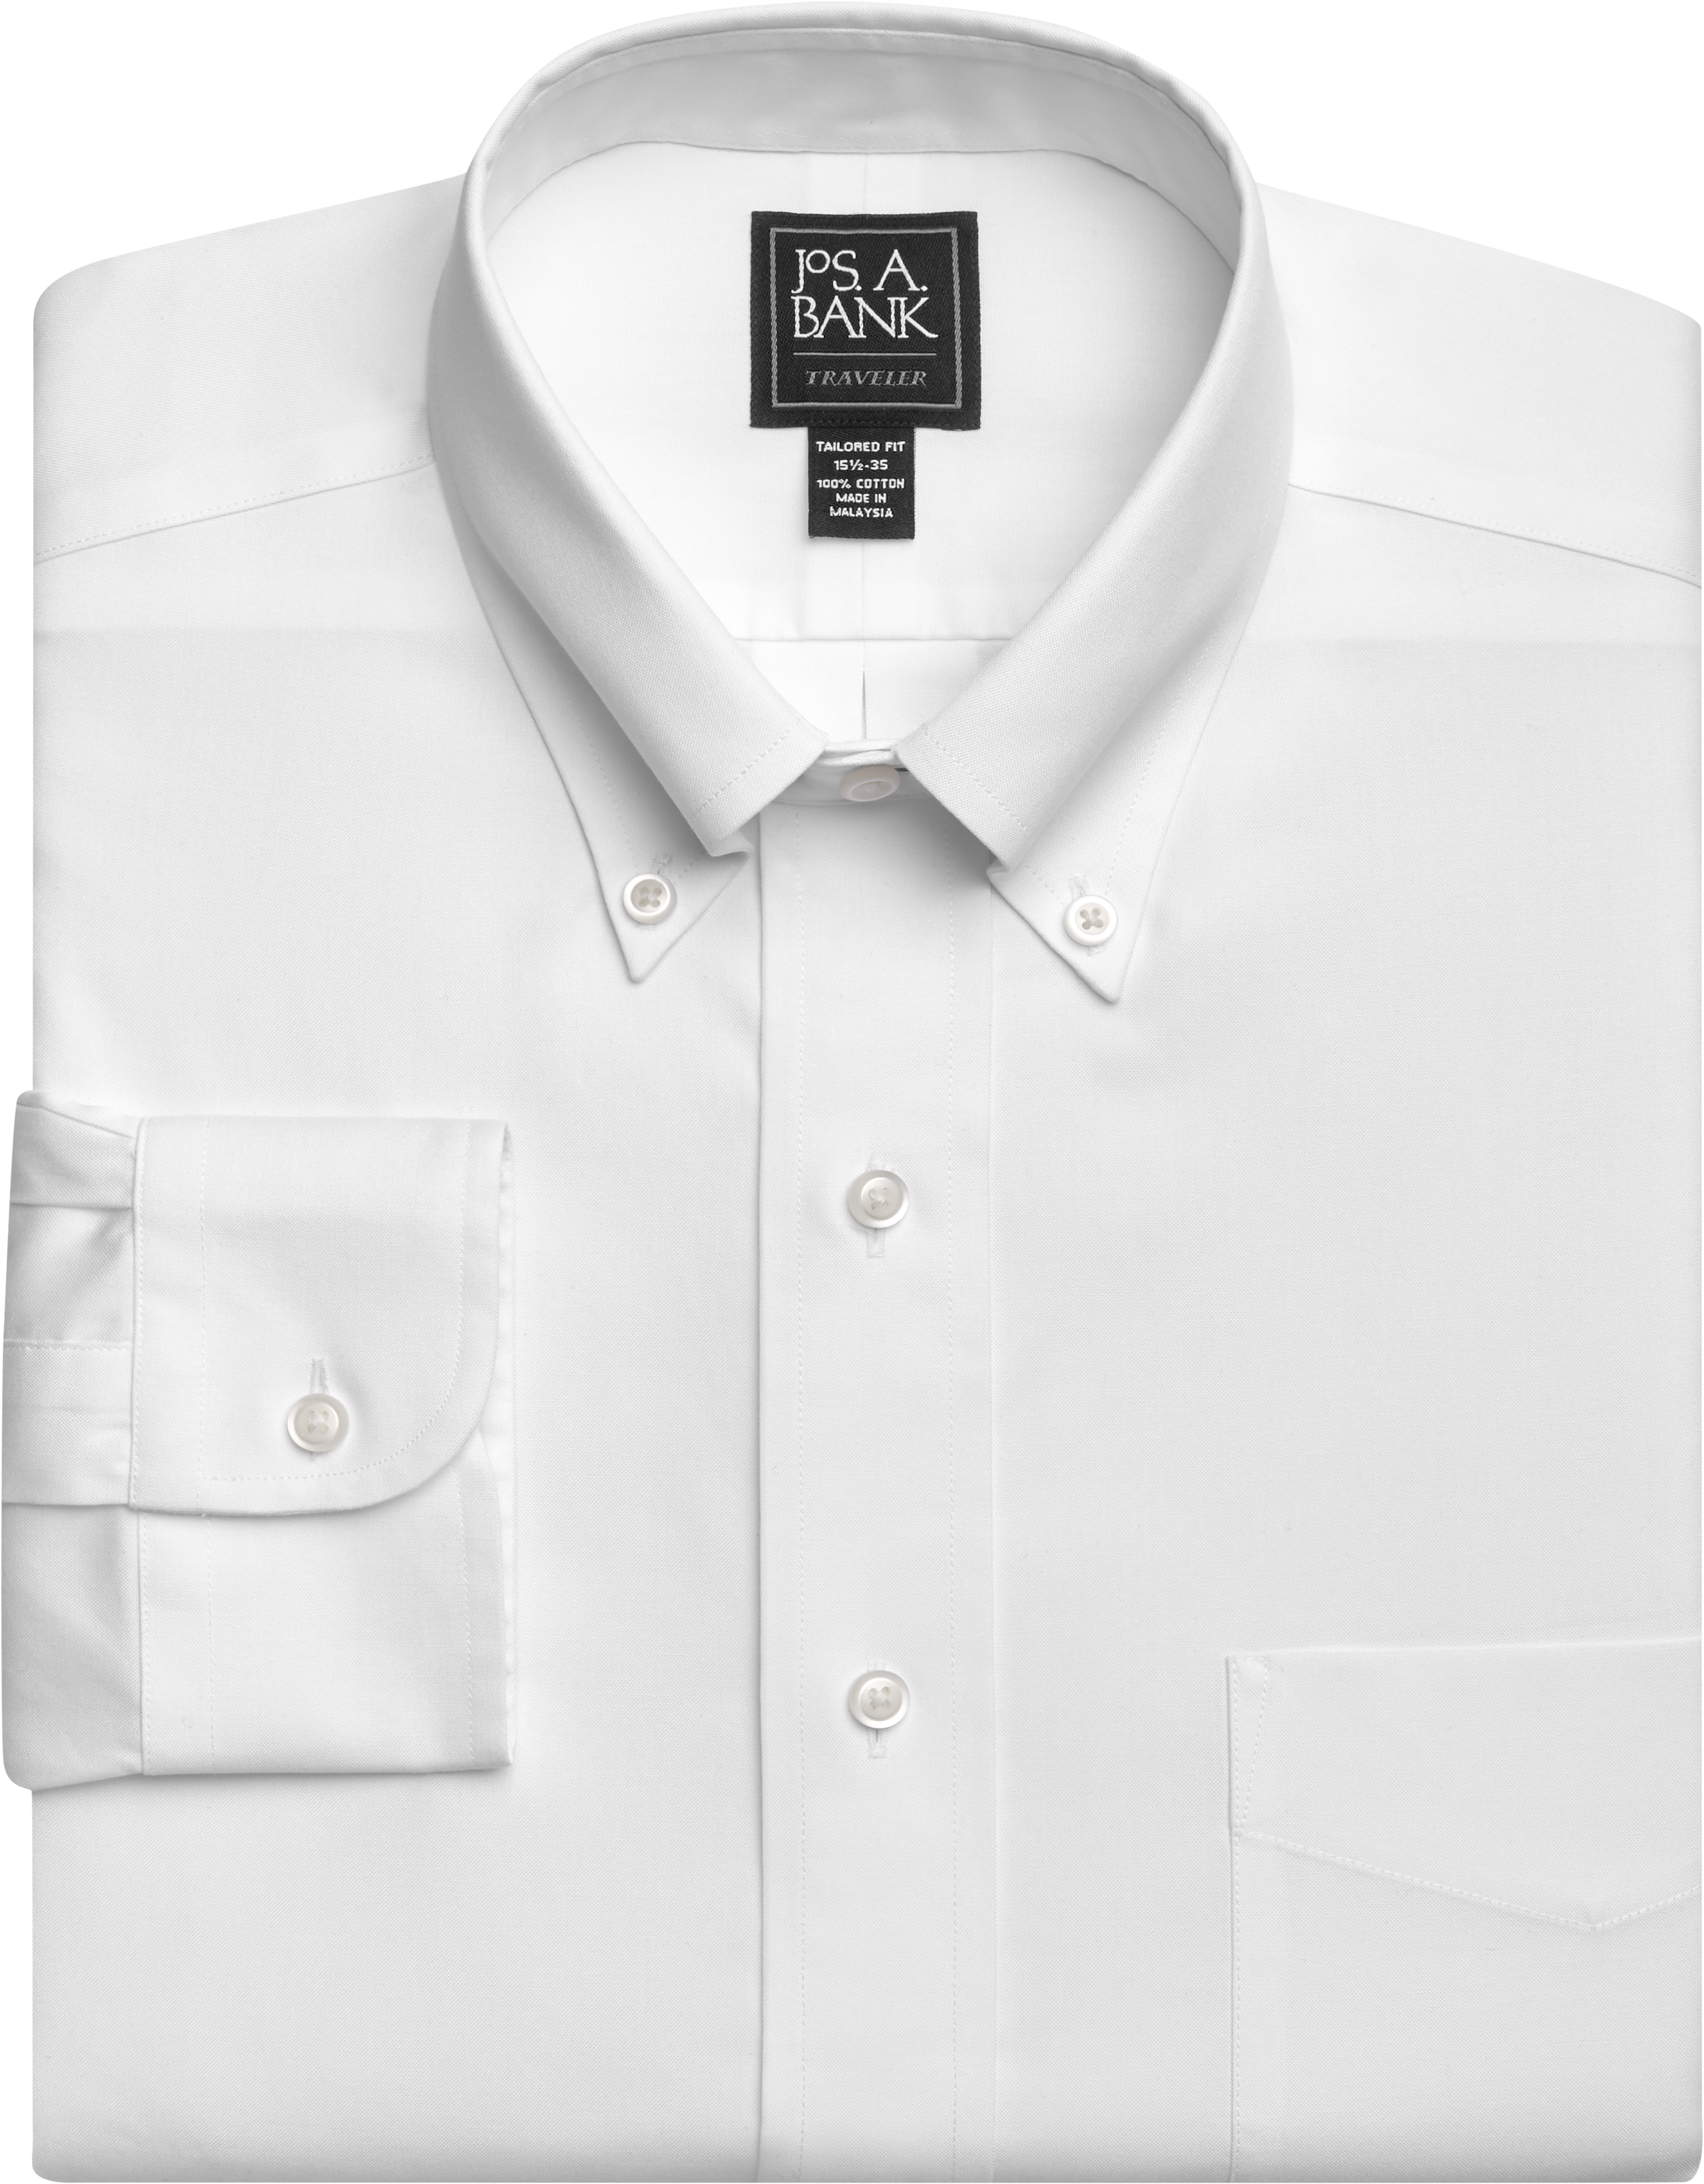 Jos A Bank Traveler White Cotton Long Sleeve Button Front Dress Shirt Mens 17.5 